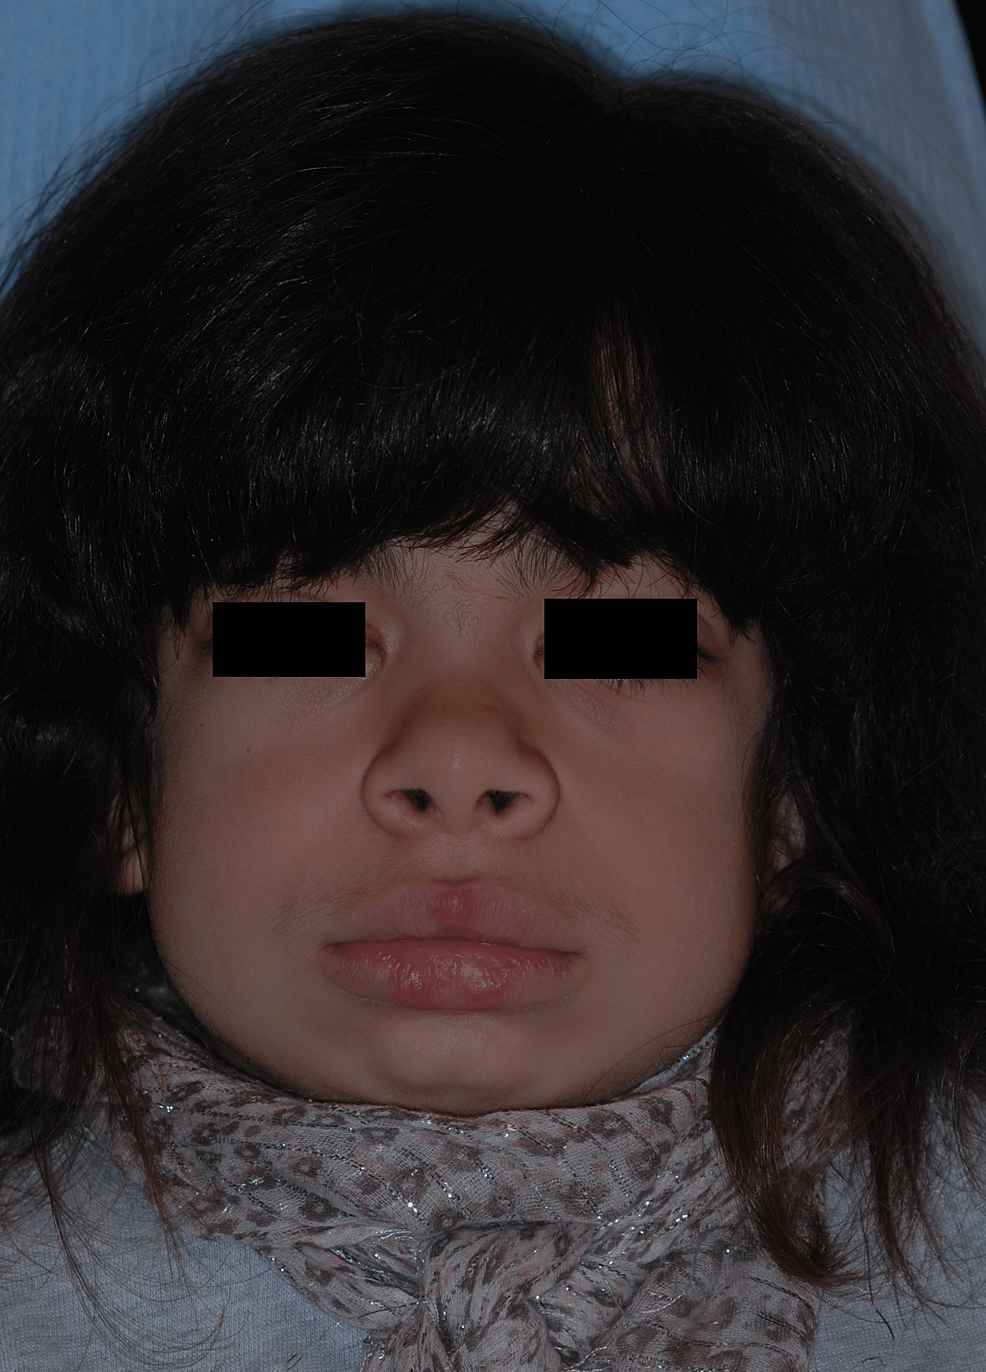 hurler syndrome corneal clouding